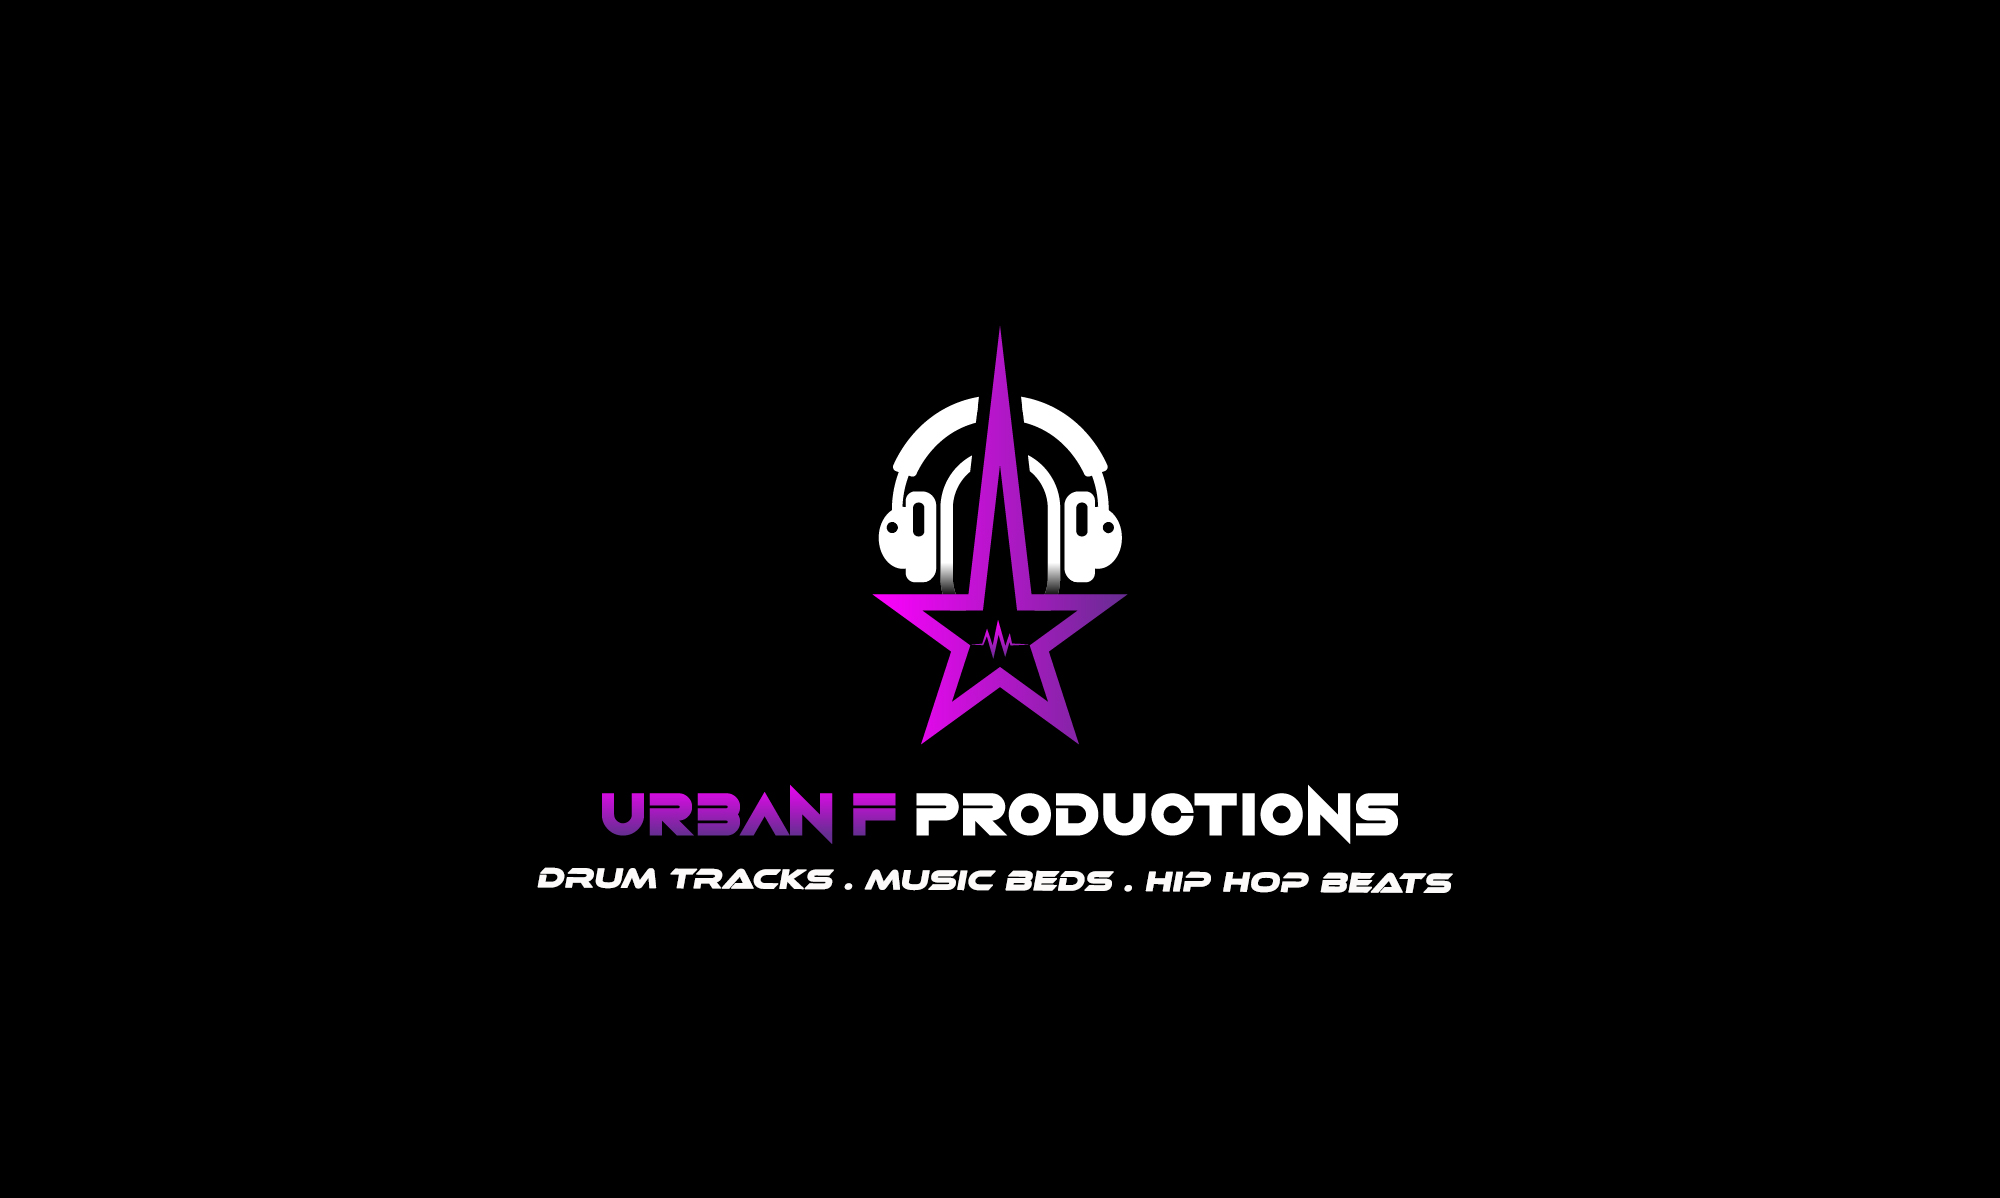 Urban F Productions